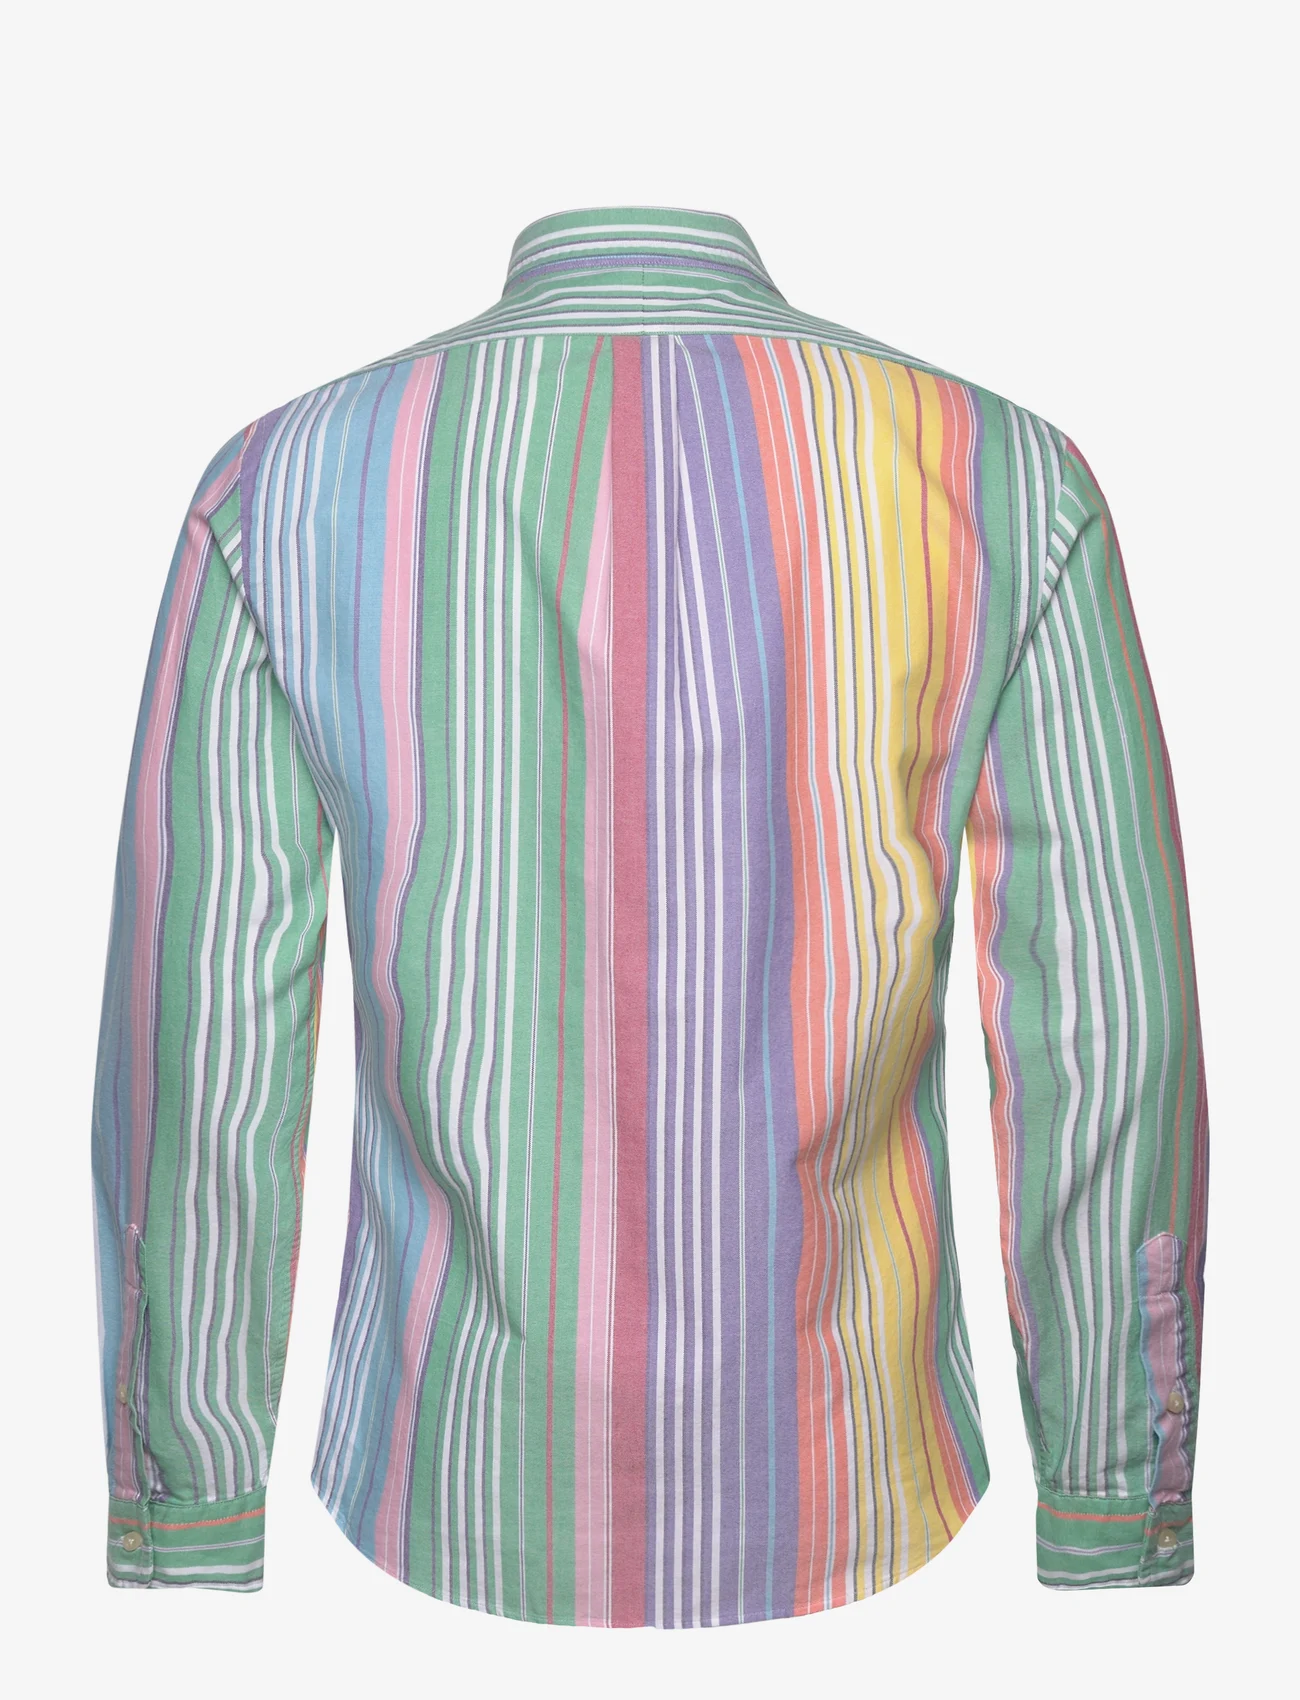 Polo Ralph Lauren - Slim Fit Striped Oxford Shirt - chemises oxford - 6346a green/yello - 1